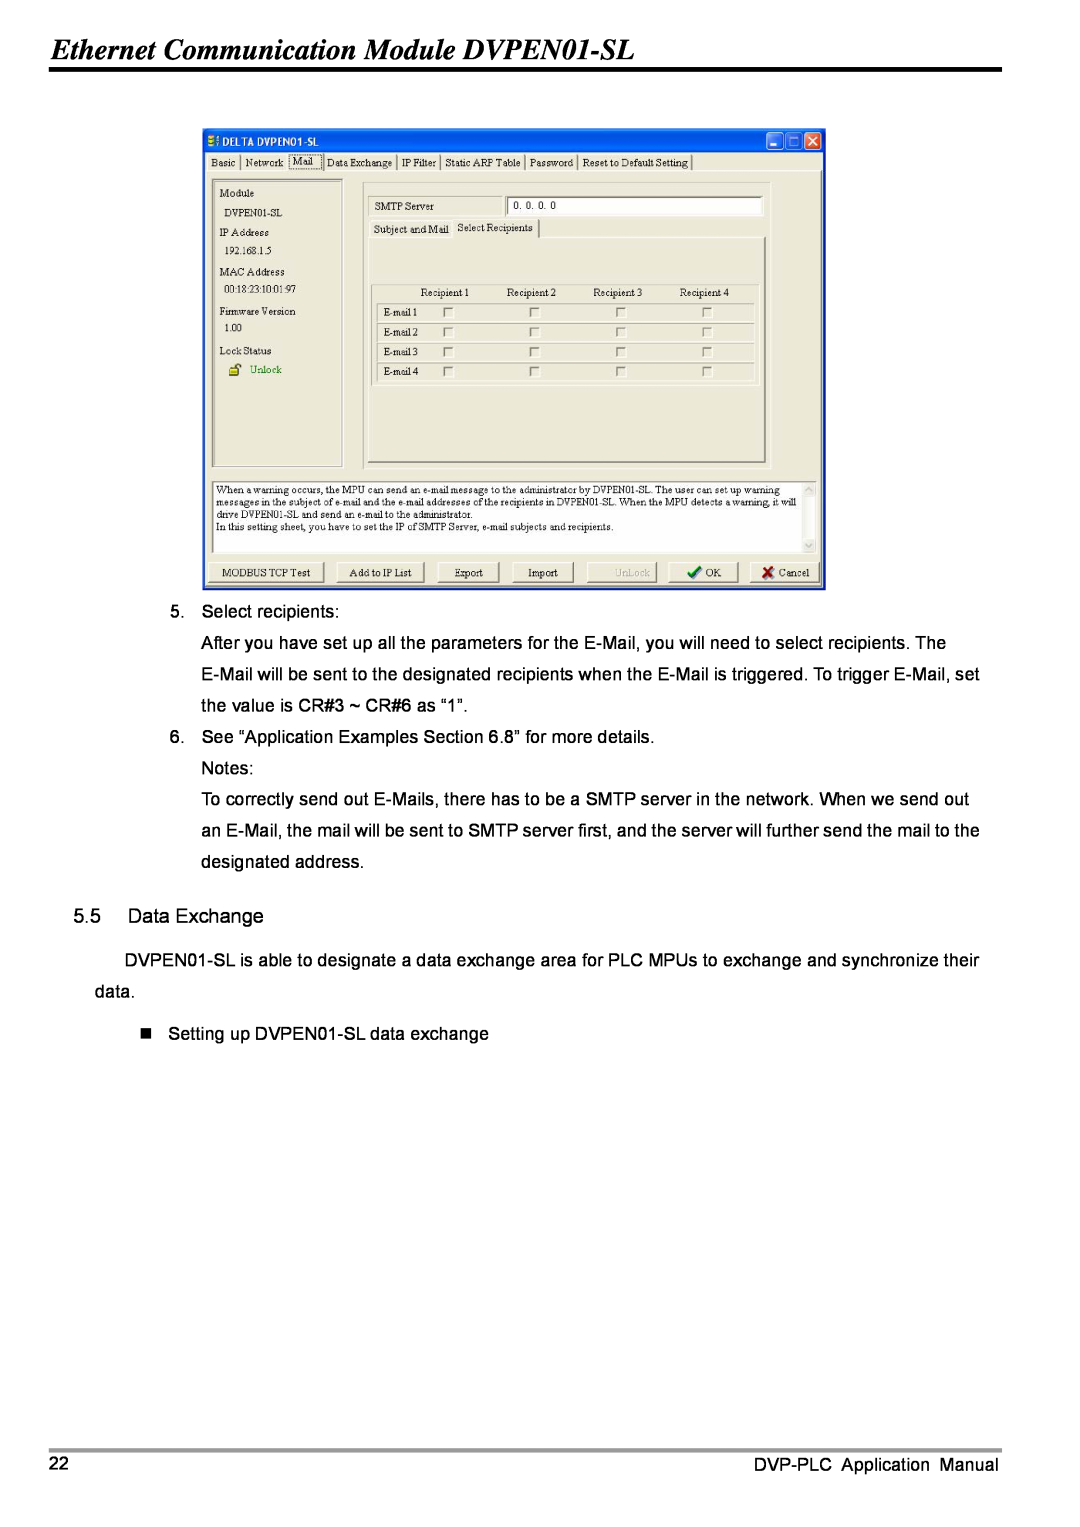 Delta Electronics manual Ethernet Communication Module DVPEN01-SL, Data Exchange 